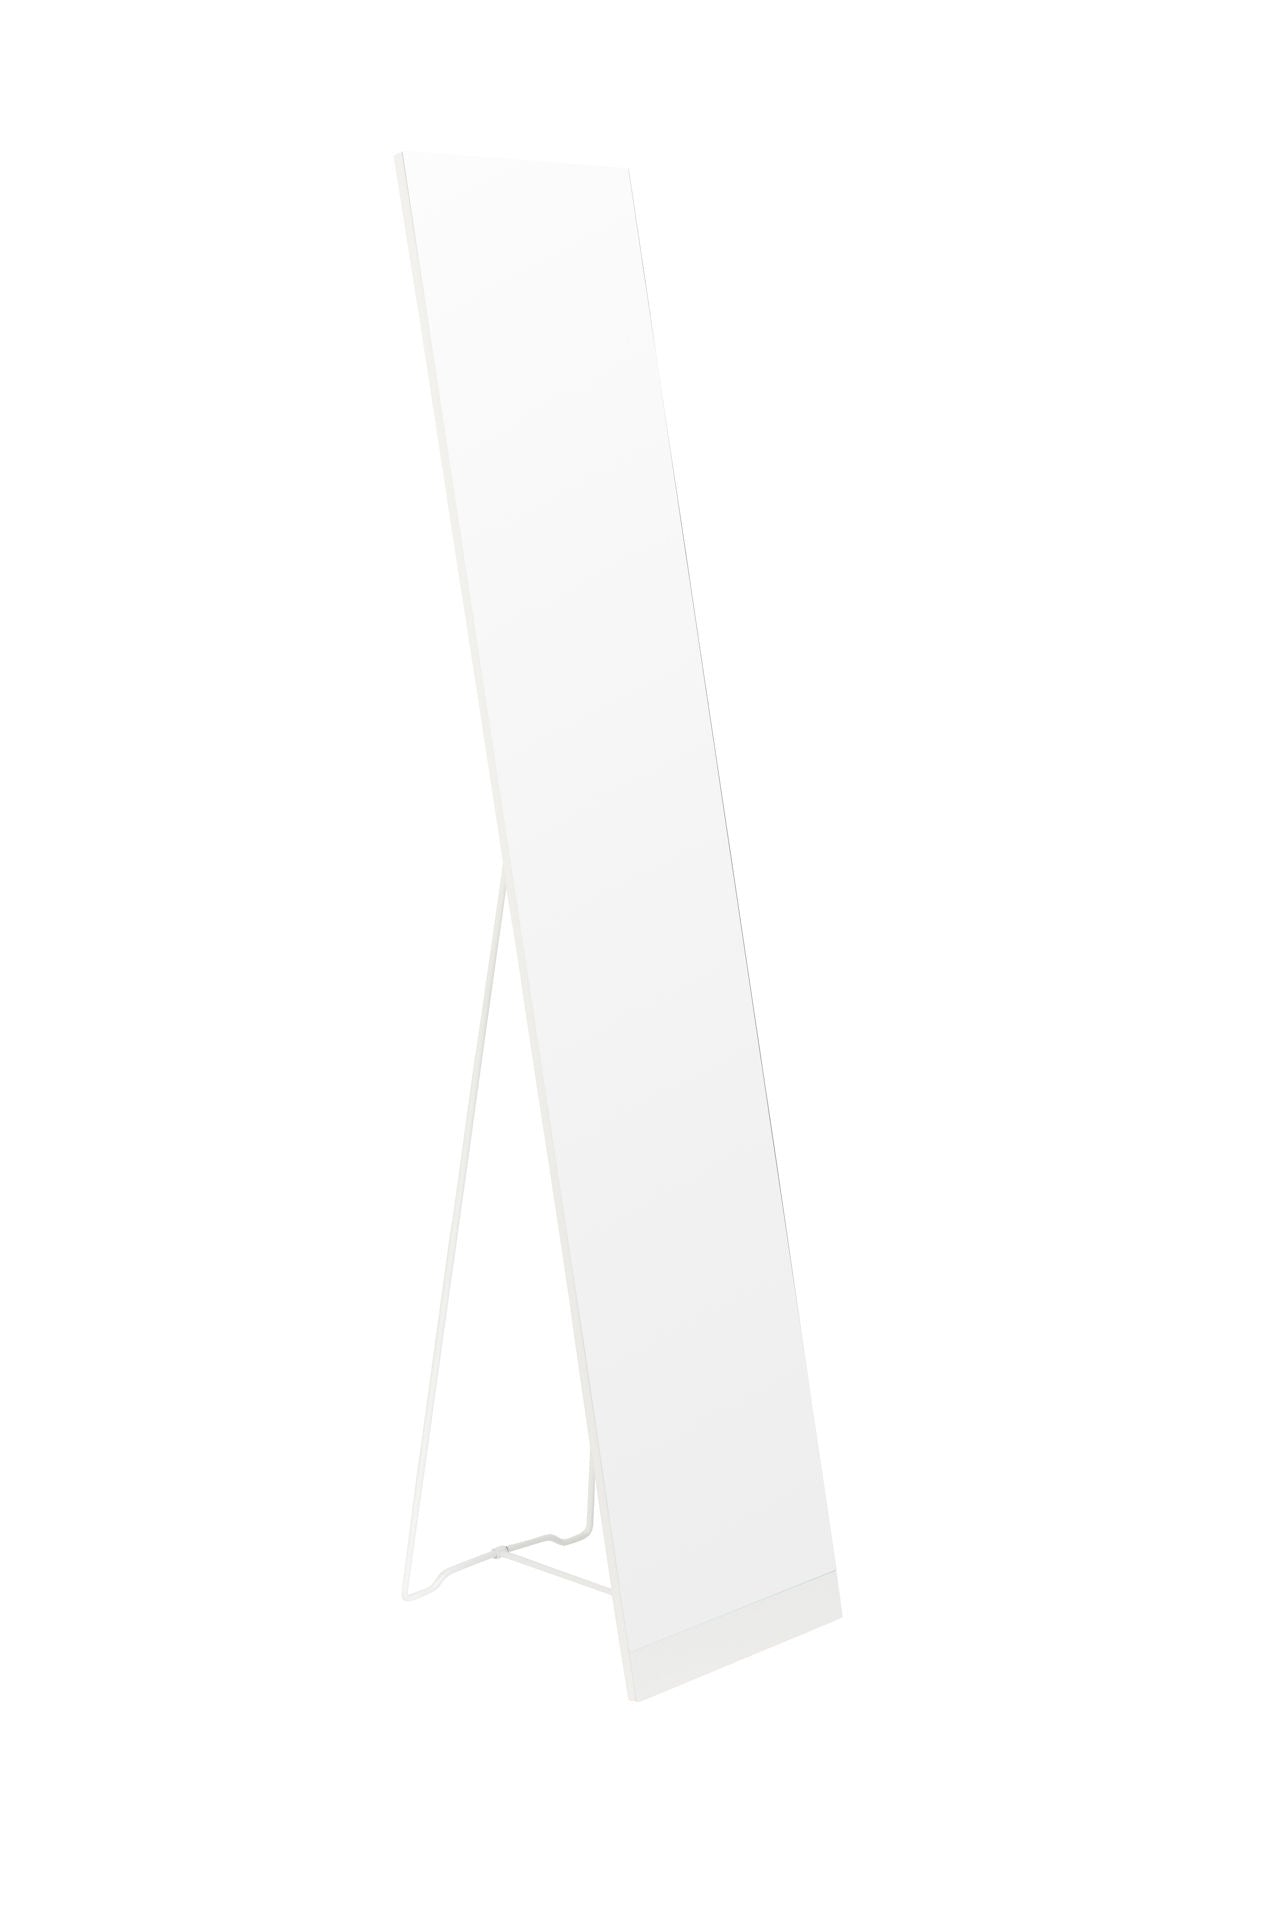 Miroir Wyndham de Nancy - Moderne - Blanc - Verre, Mdf, Acier - 36,5 cm x 30,5 cm x 147,5 cm